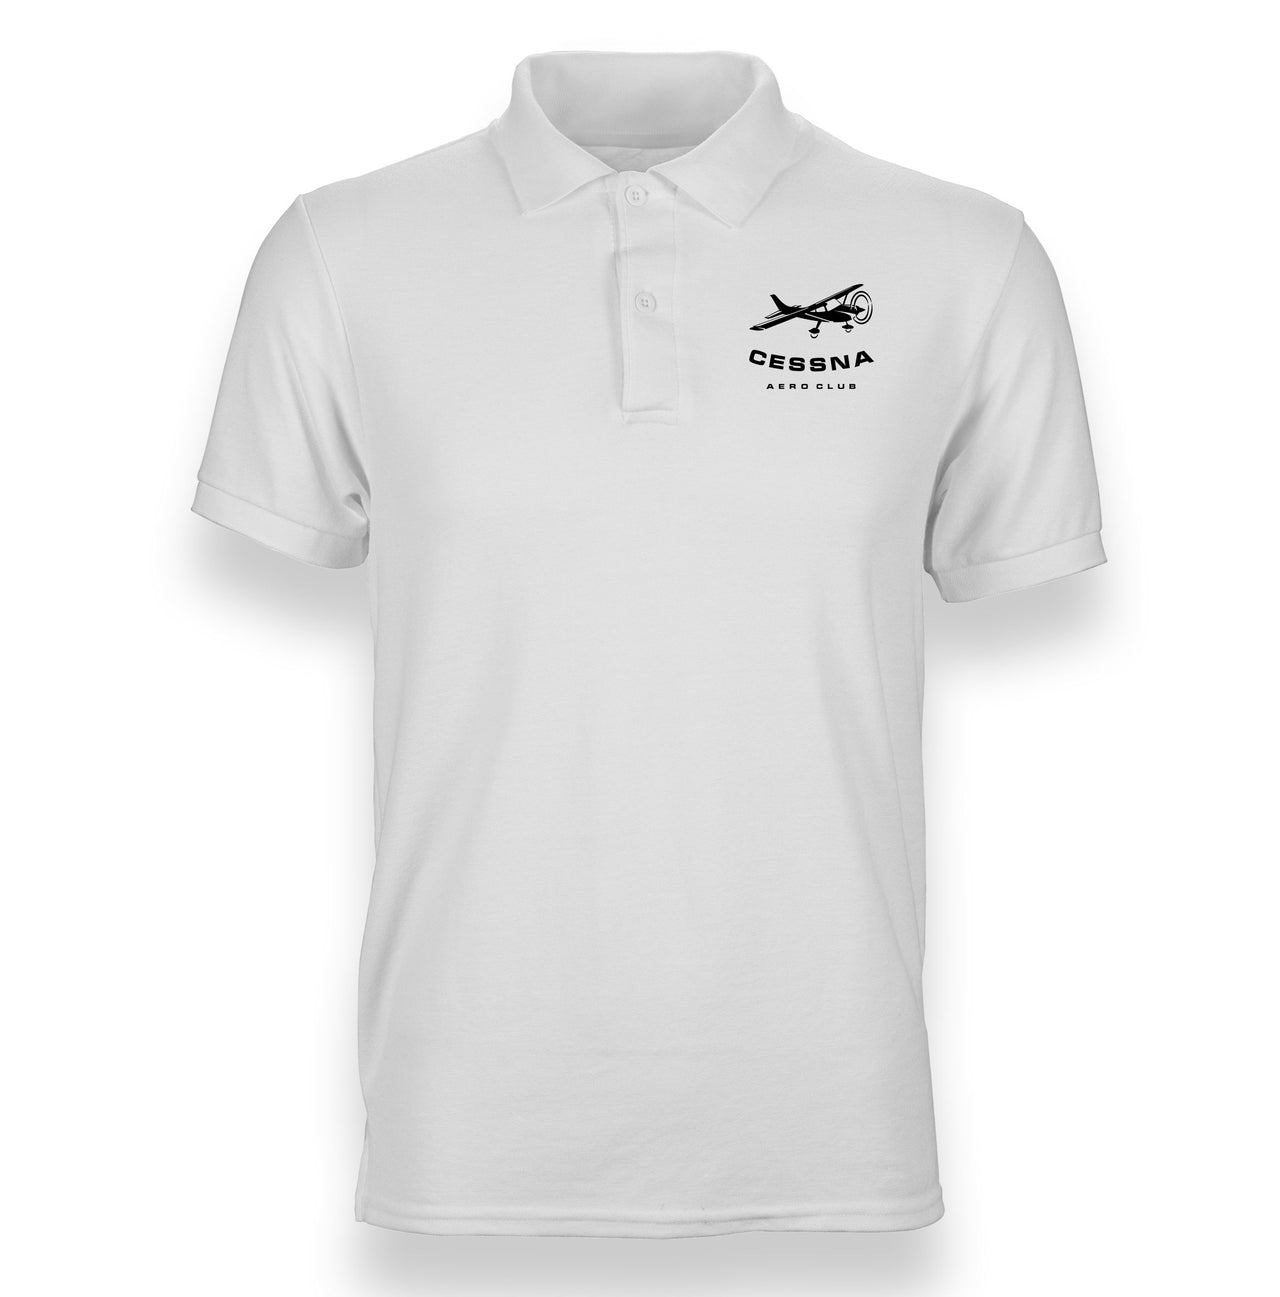 Cessna Aeroclub Designed Polo T-Shirts